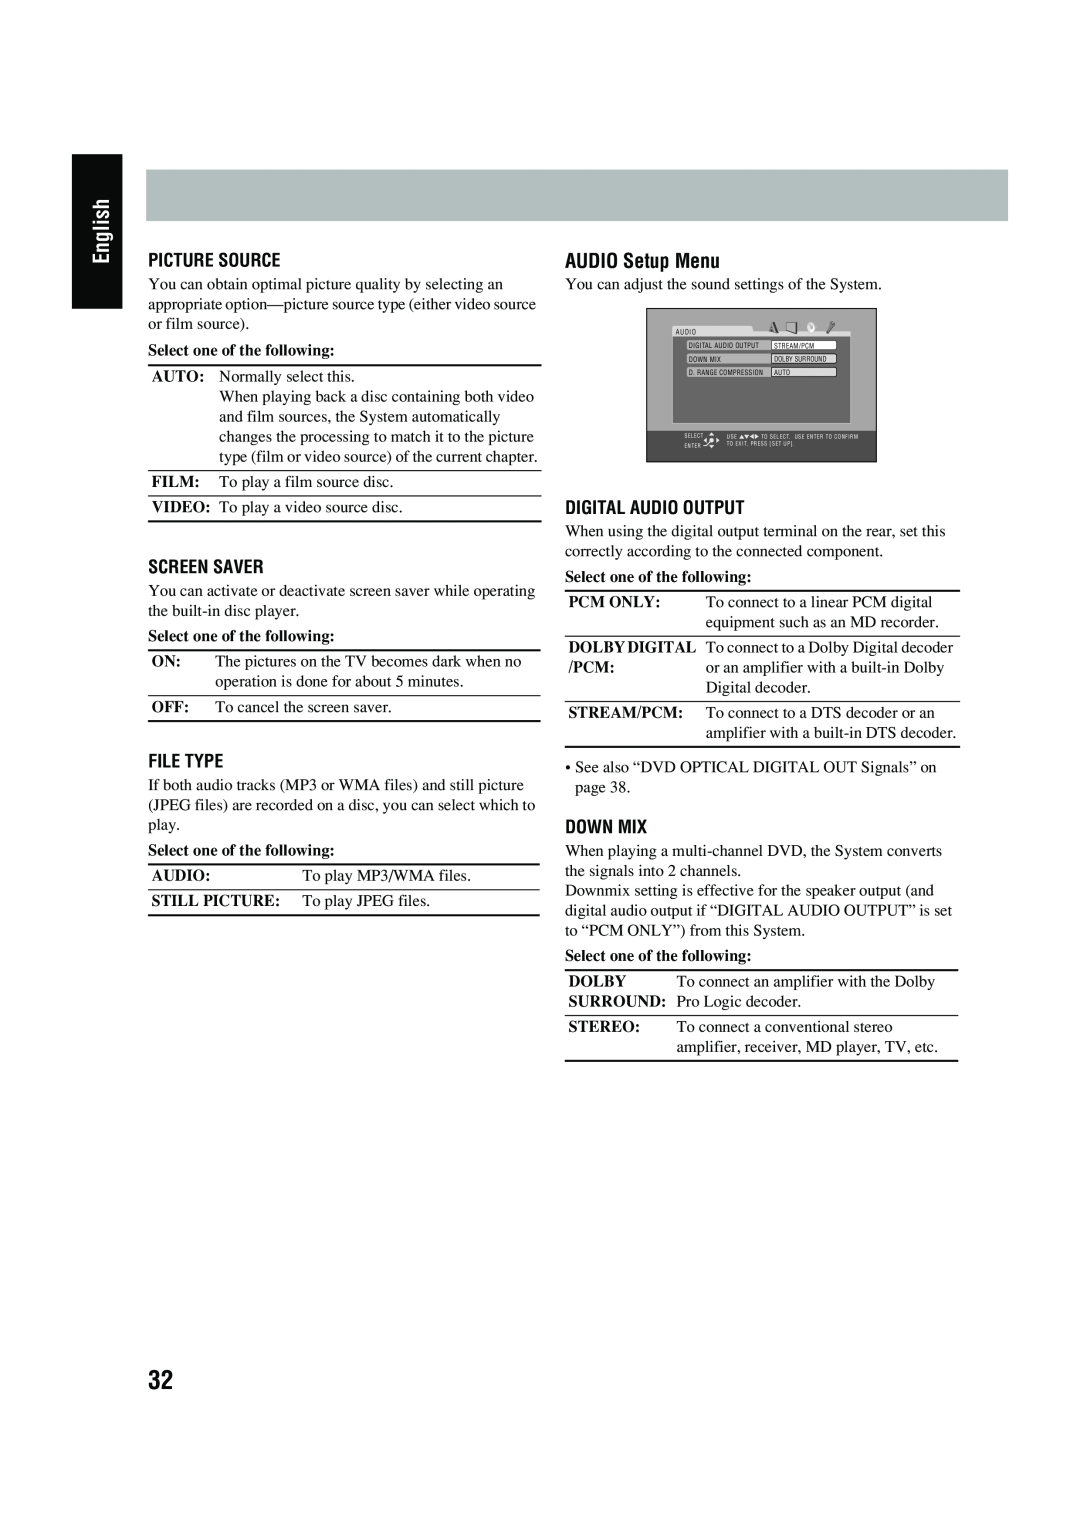 JVC FS-P550 manual AUDIO Setup Menu, Picture Source, Screen Saver, File Type, Digital Audio Output, Down Mix, English 